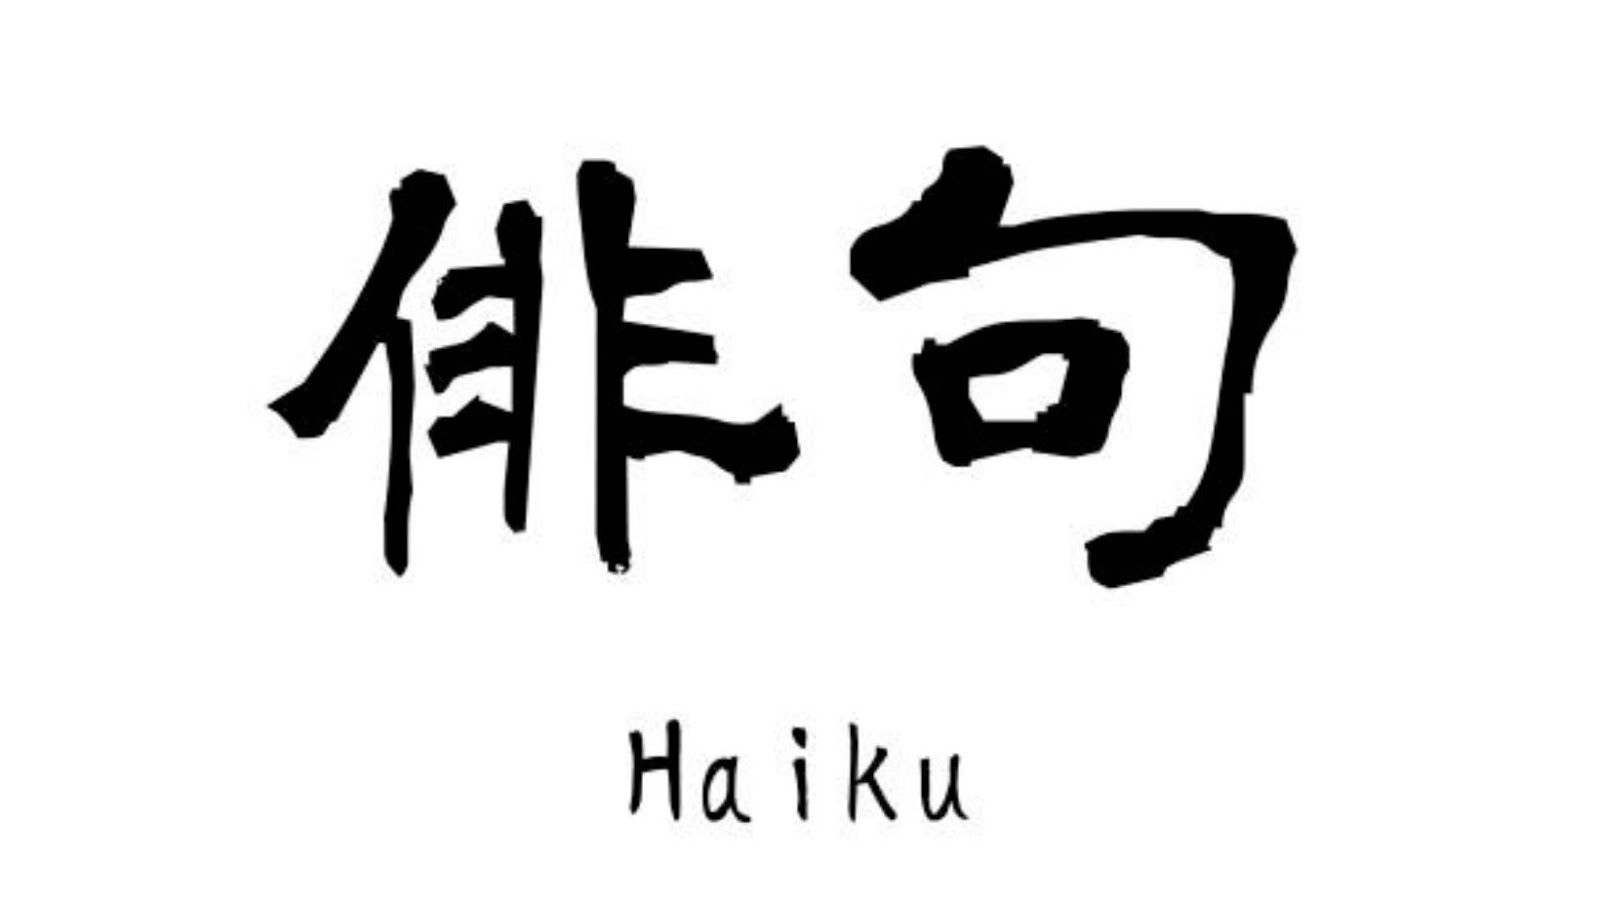 japanese haiku are similar to english romantic poems because they both